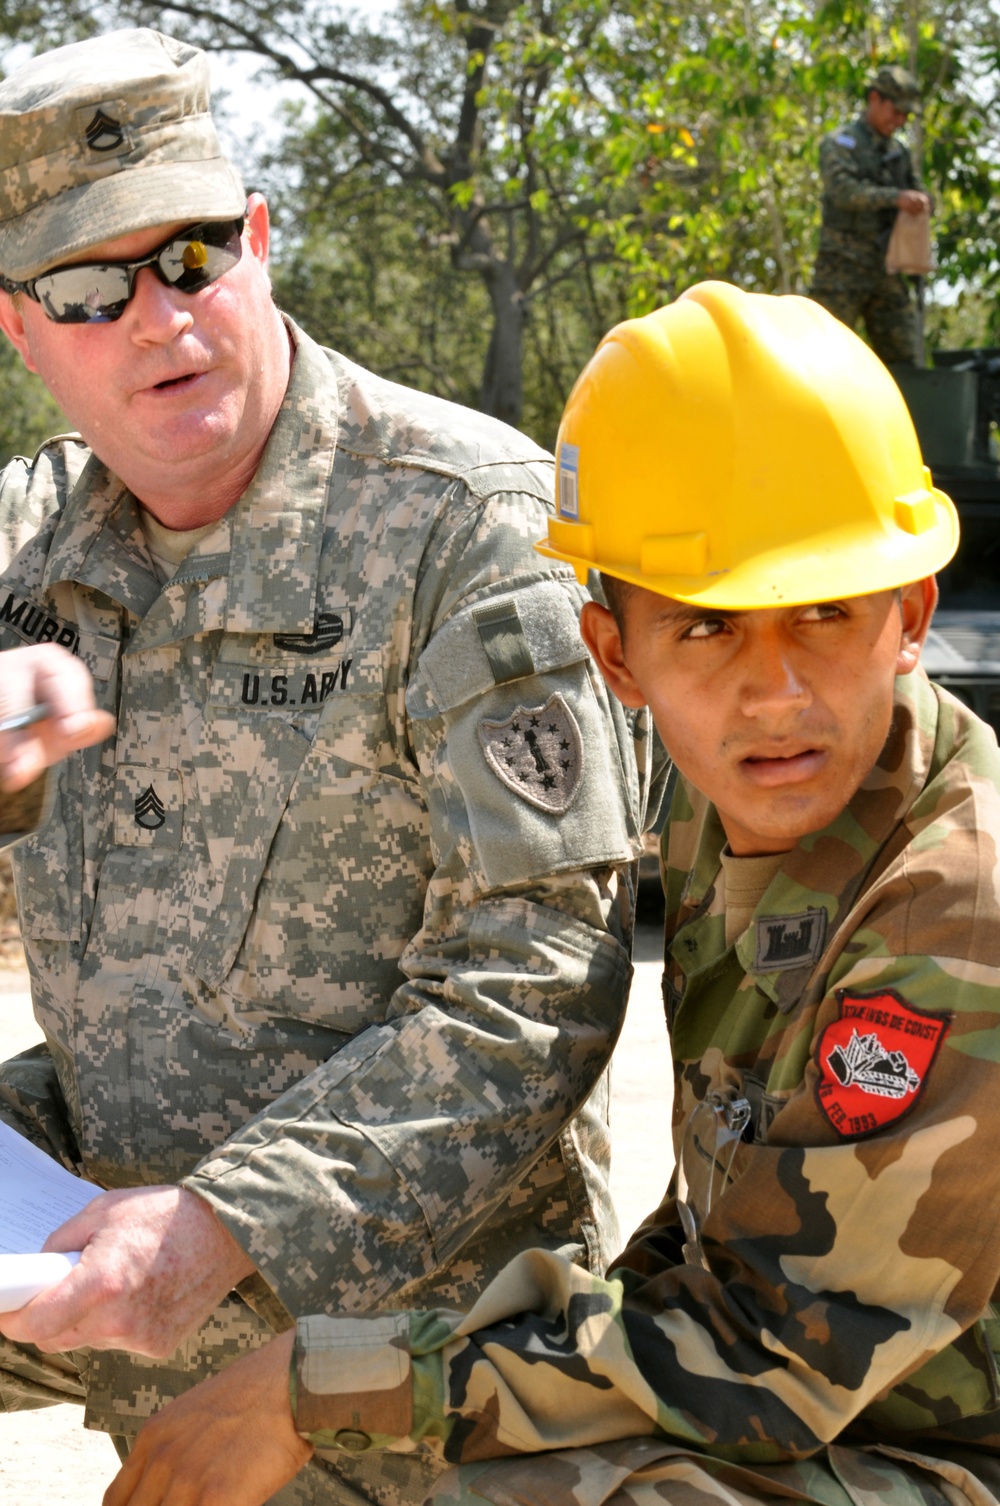 US, Salvadoran soldiers work together to build school